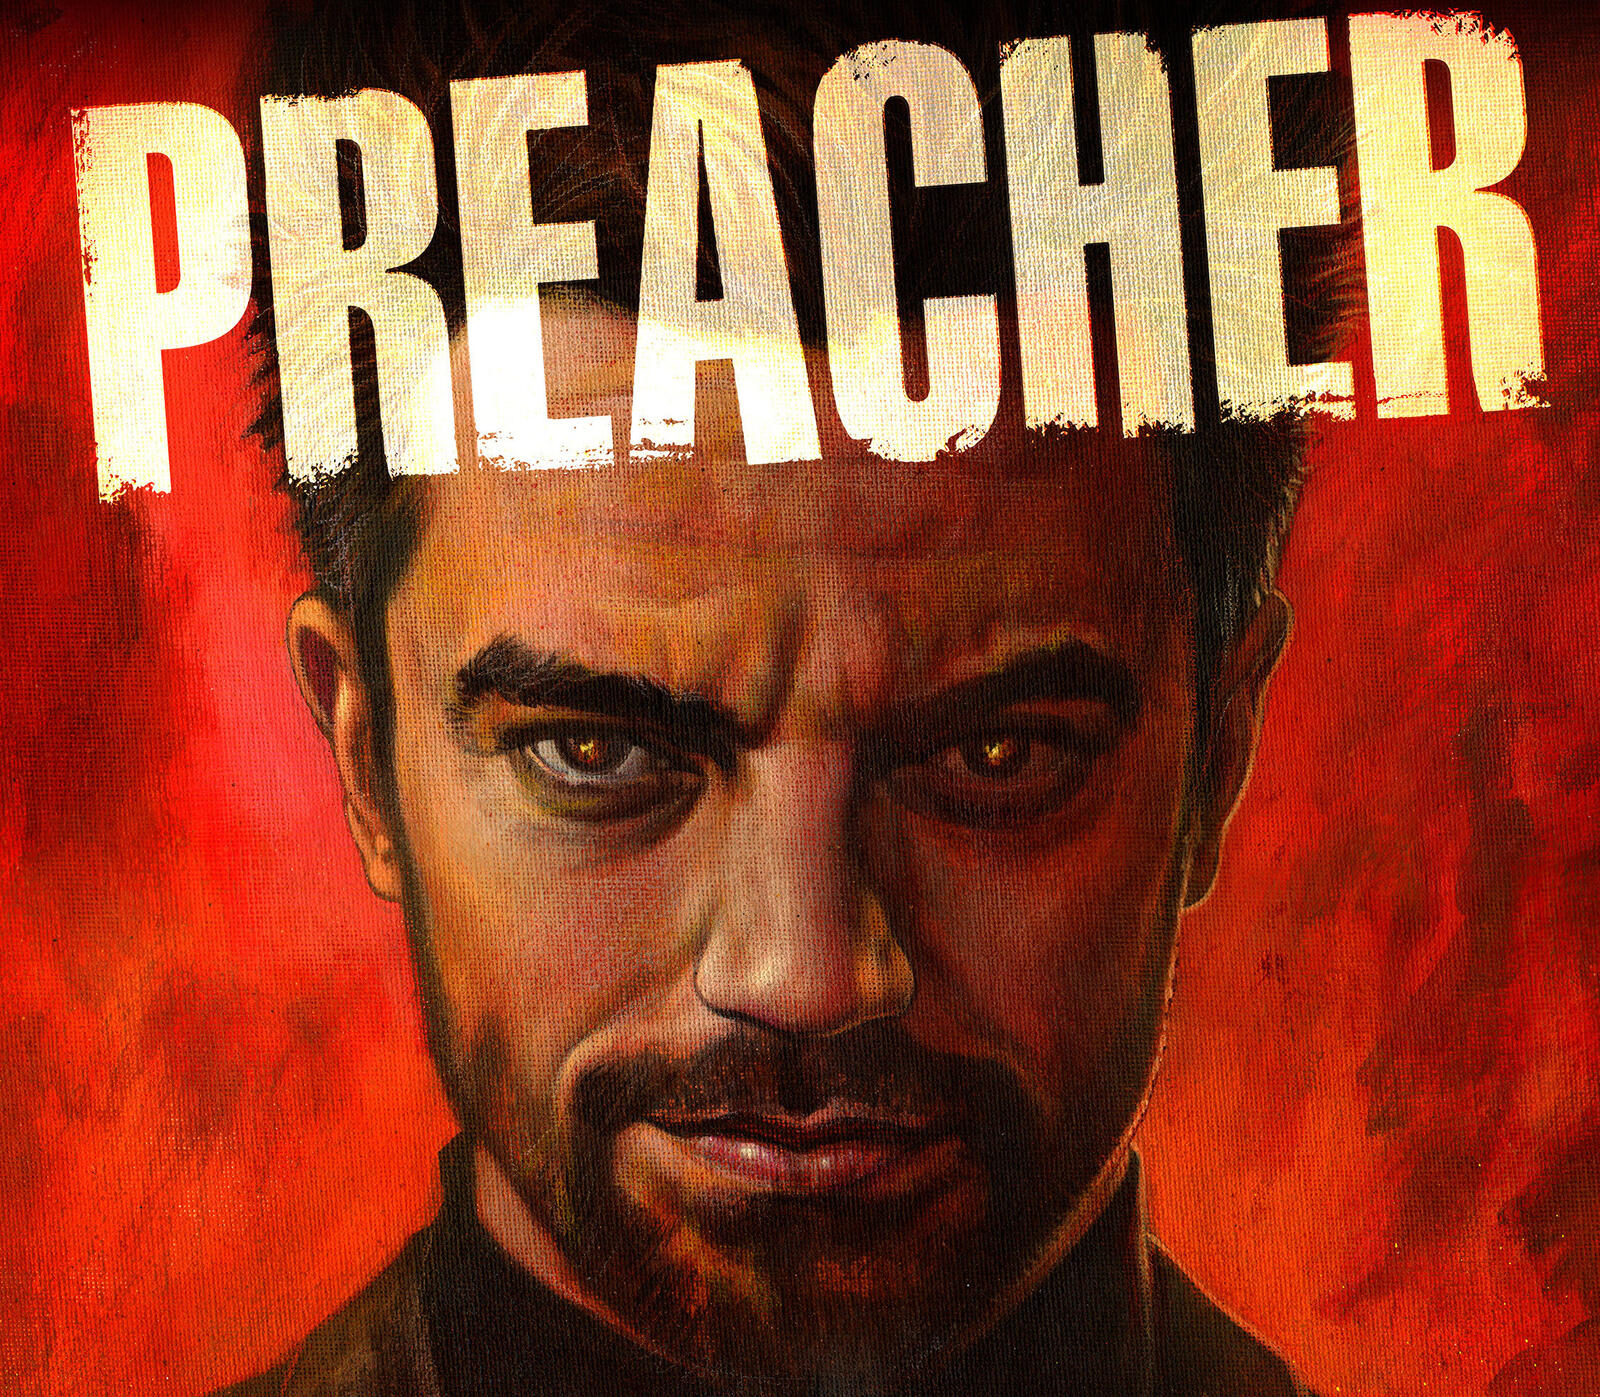 Wallpapers TV show Preacher boys on the desktop